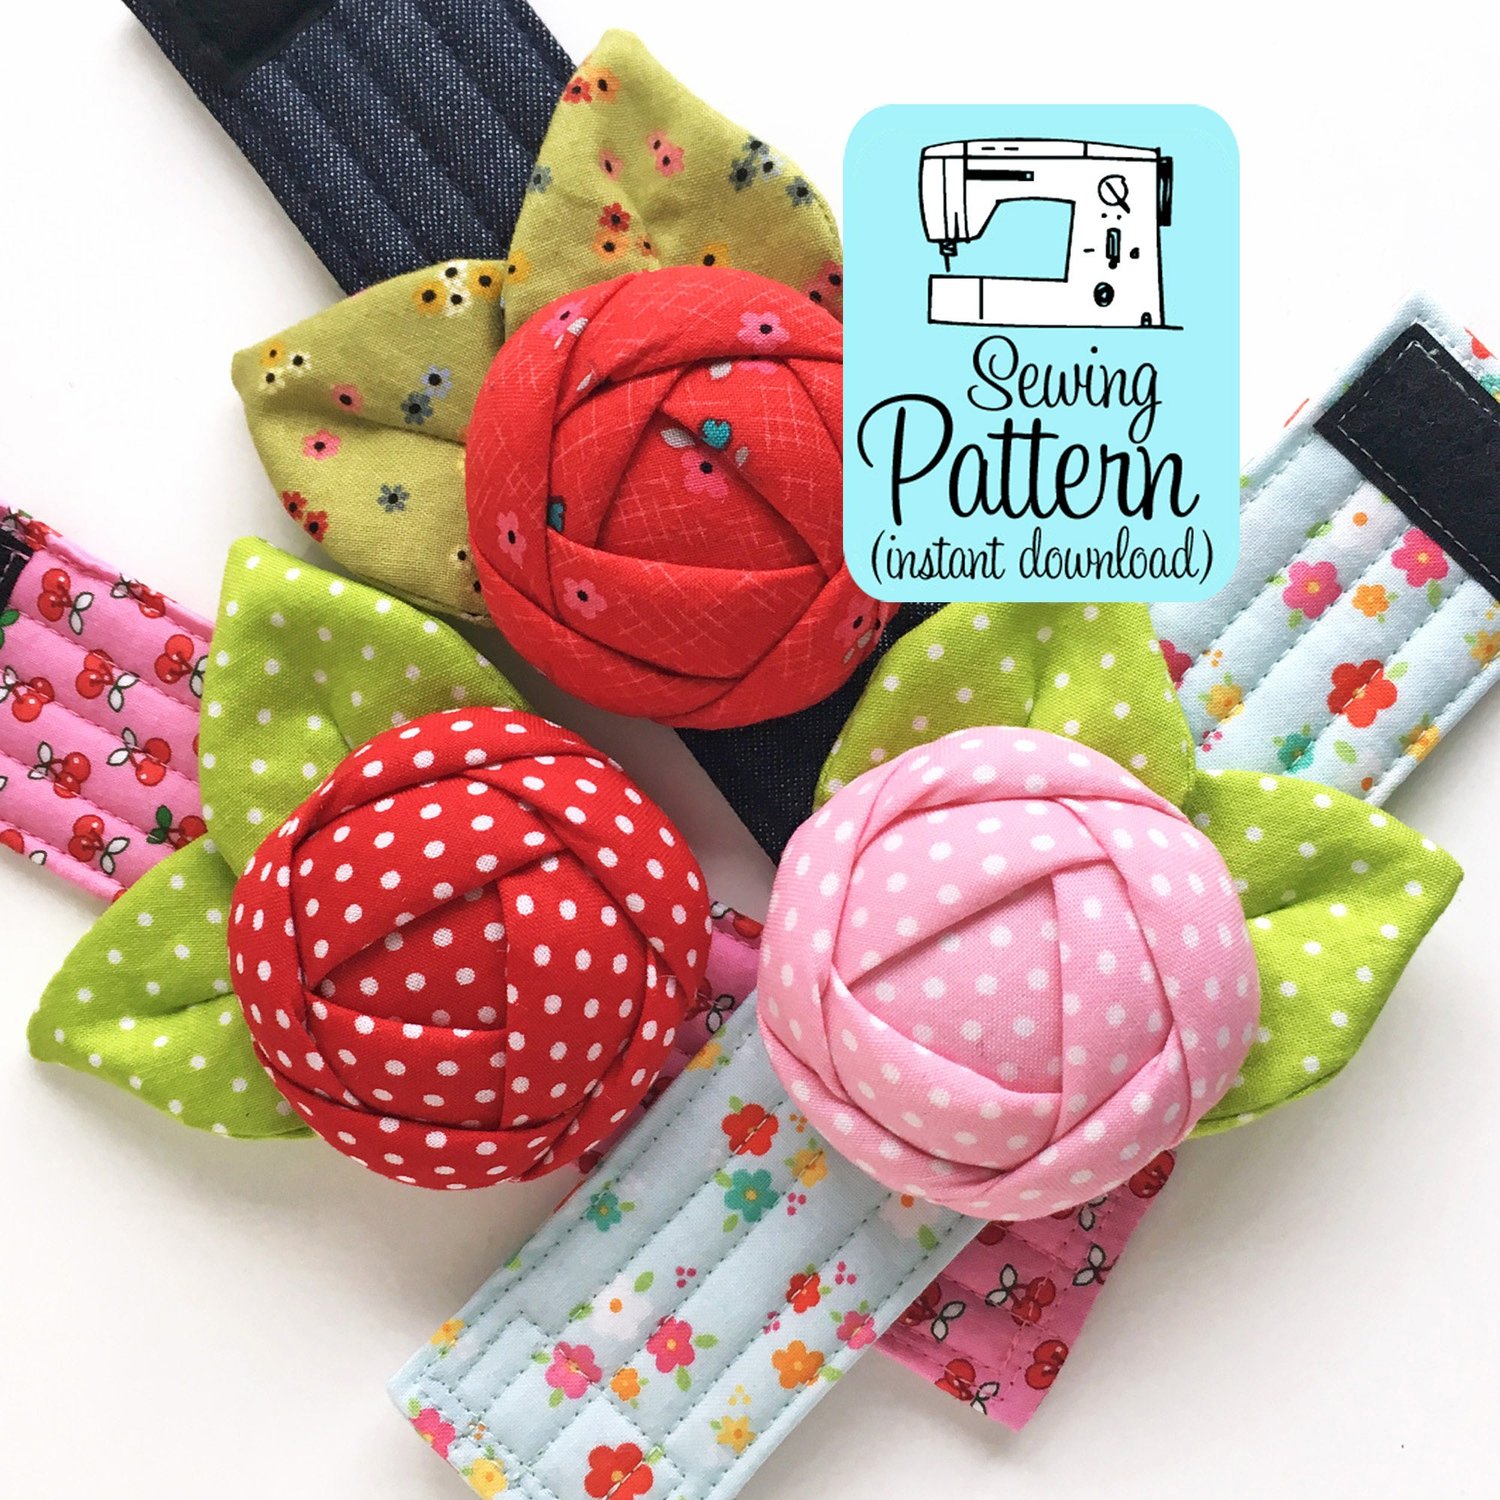 Wrist Pin Cushion Pattern – The Wee Fabric Shop